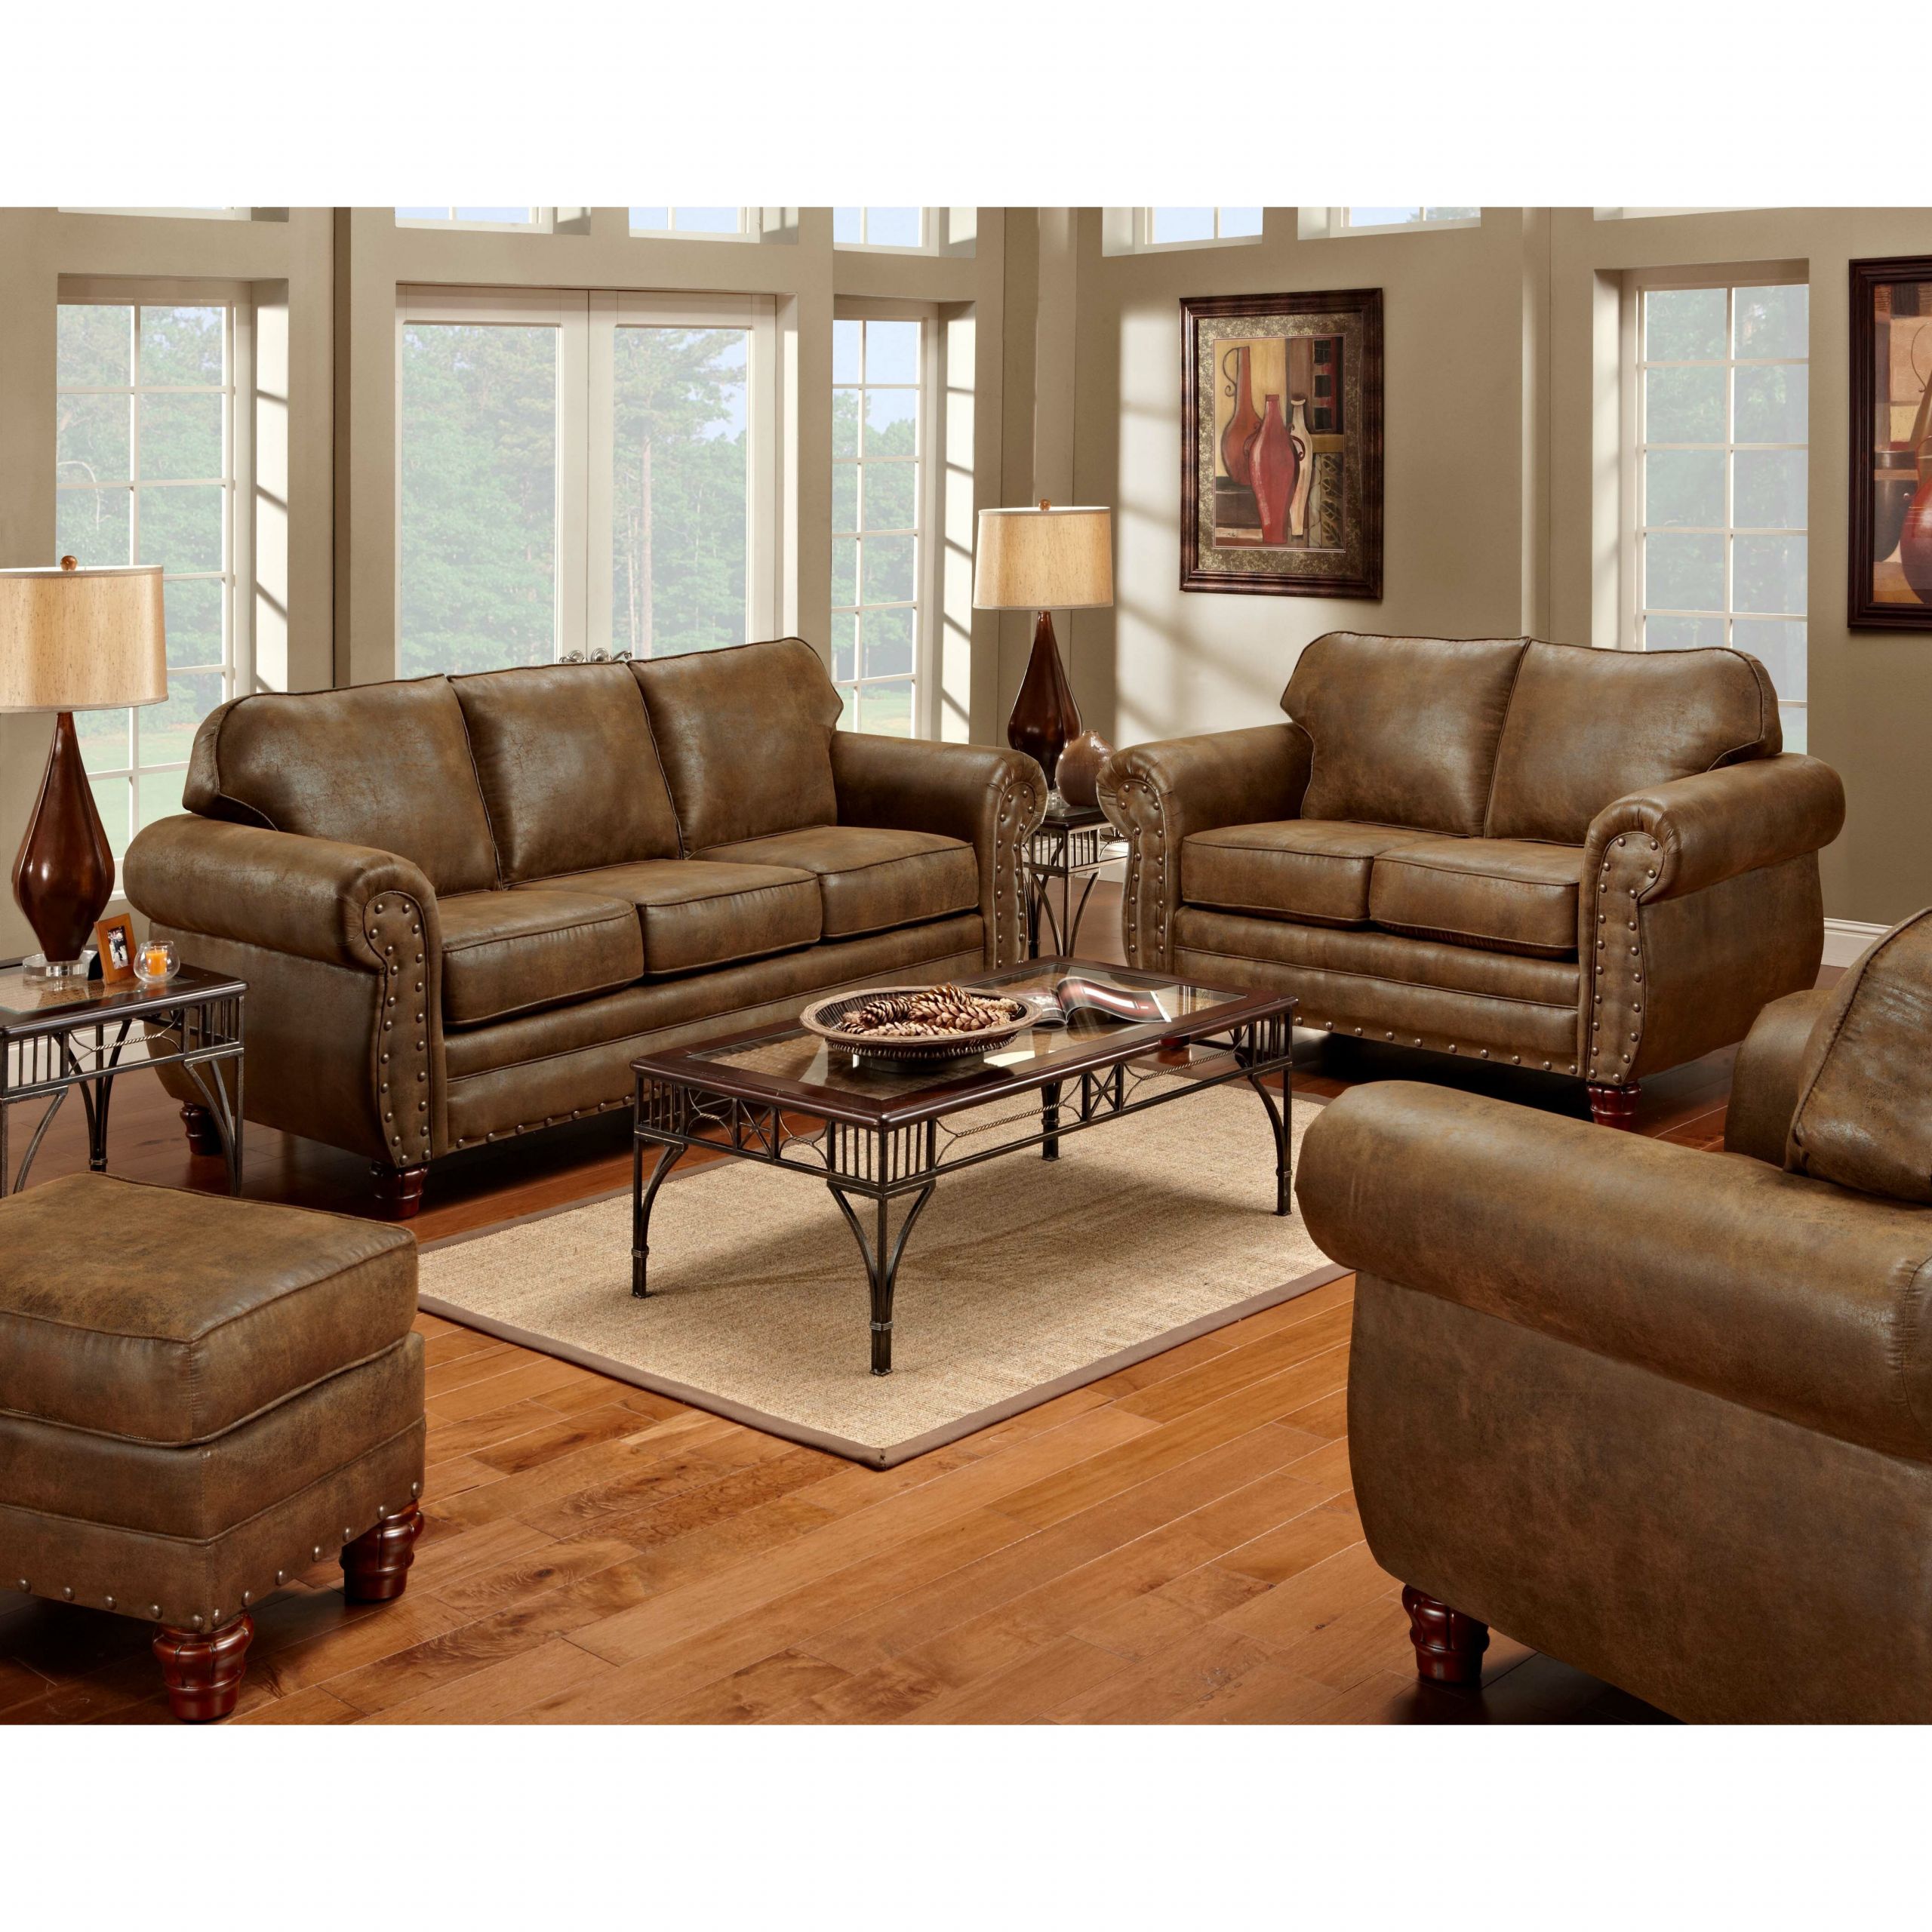 Wayfair Chairs Living Room
 American Furniture Classics Sedona 4 Piece Living Room Set